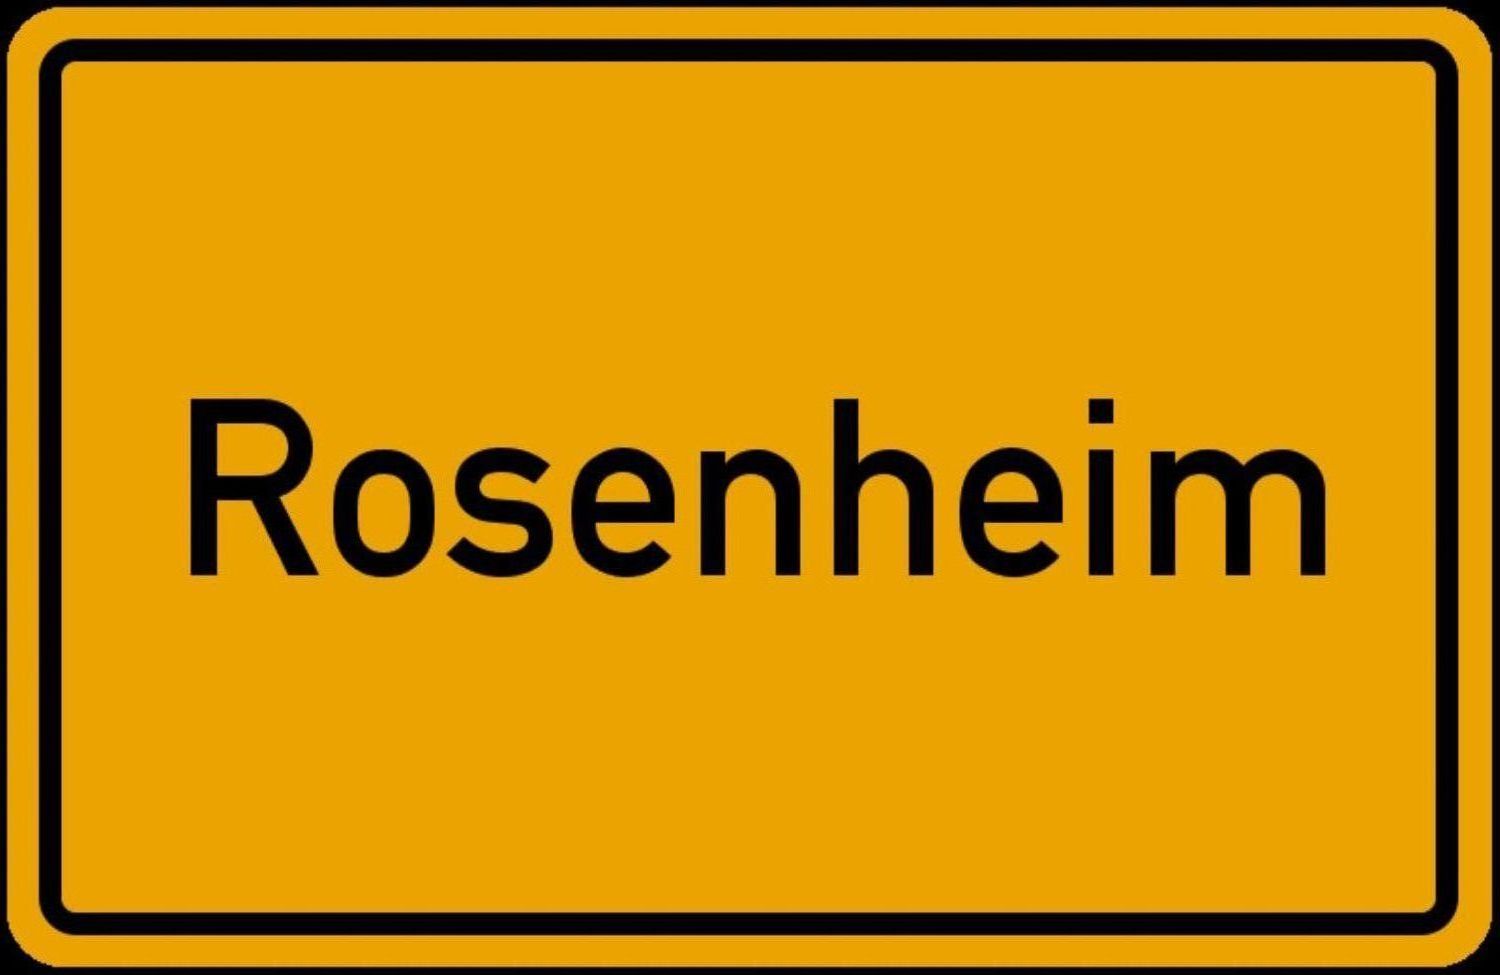 Stadtschild: Stadt Rosenheim